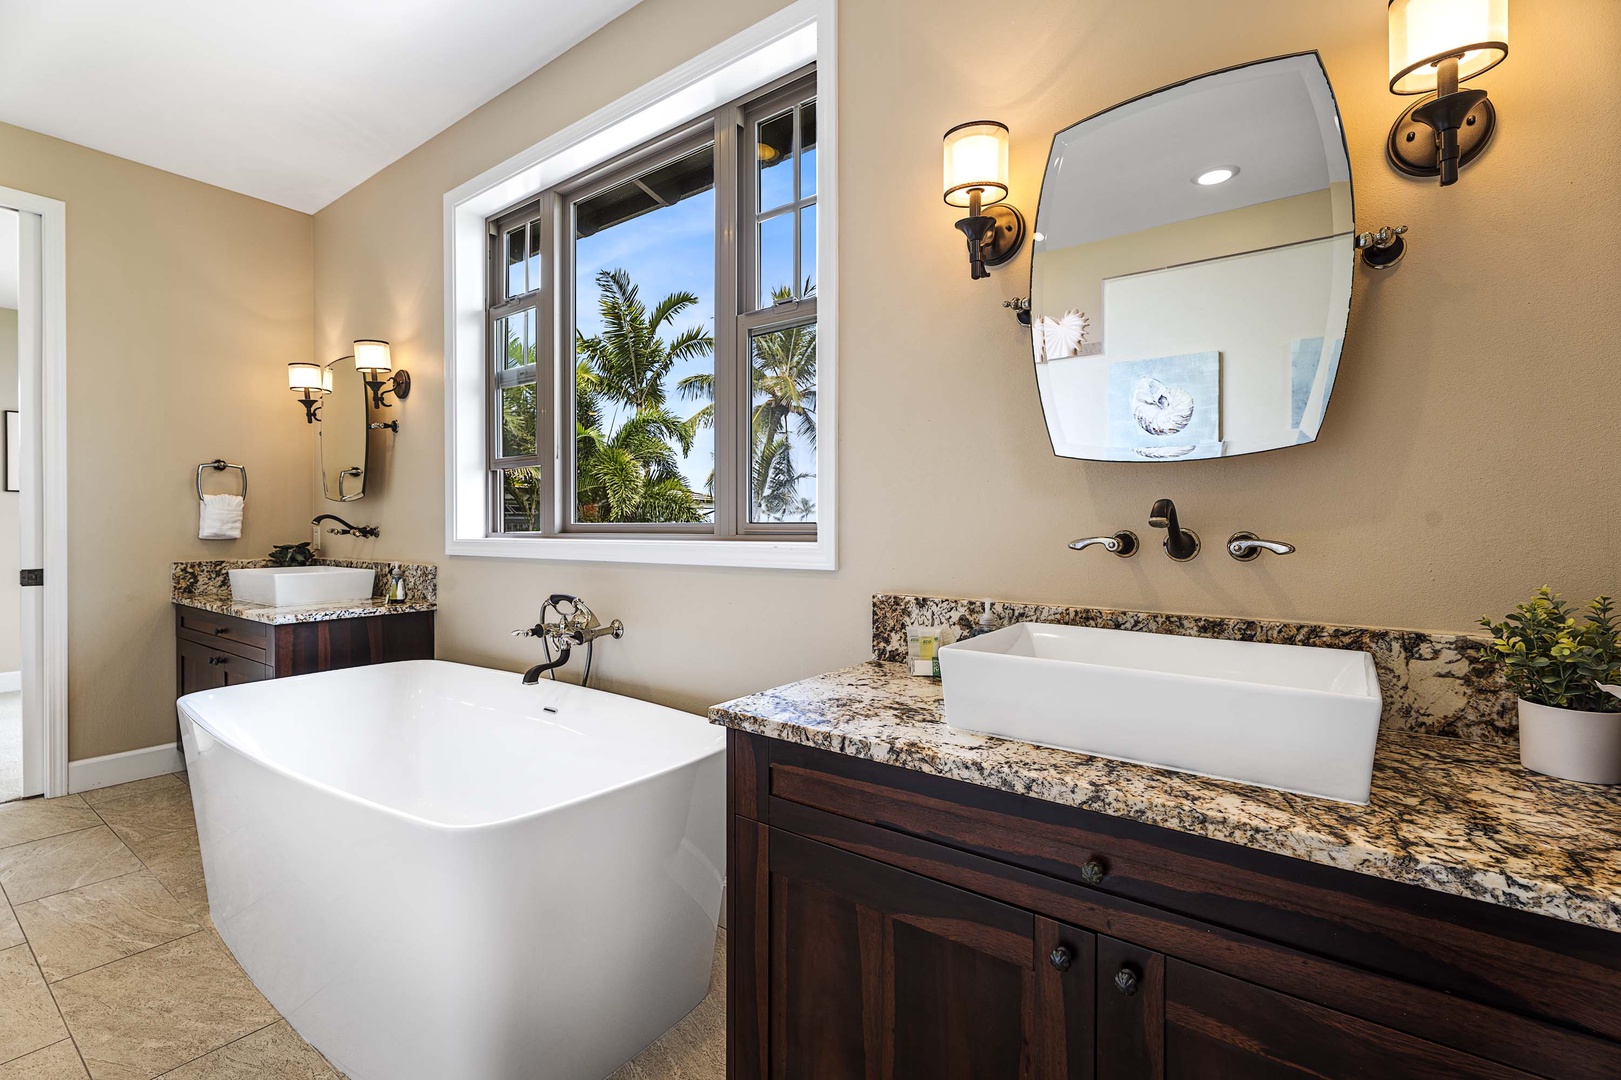 Kailua Kona Vacation Rentals, Holua Kai #20 - Primary Bathroom fit for royalty